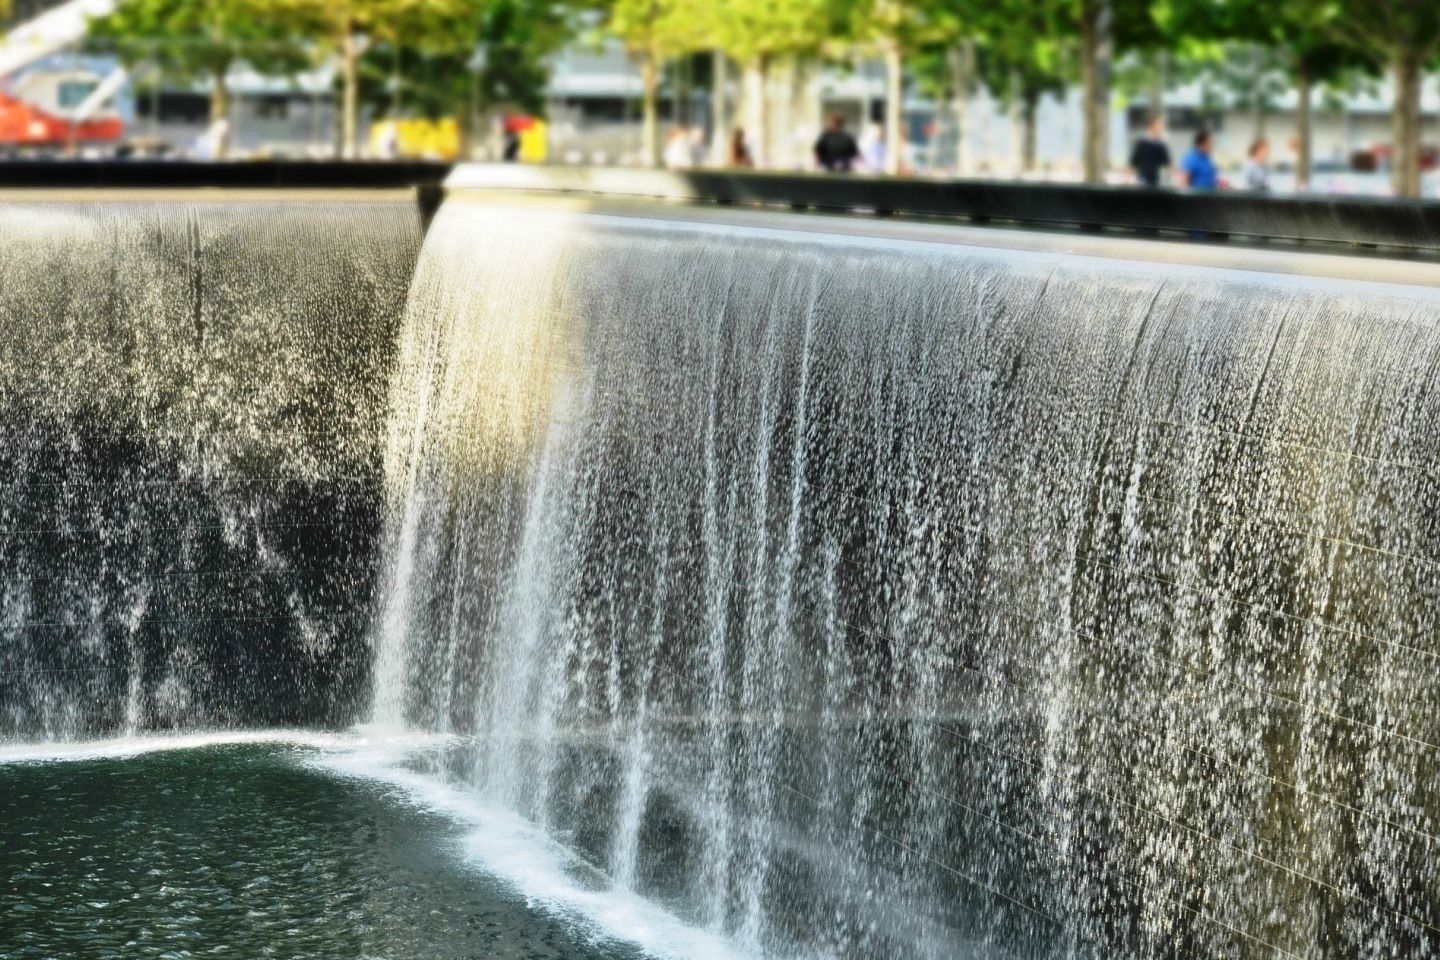 9/11 New York City Trade Center Fountain. Downloaded free from Pixabay.com